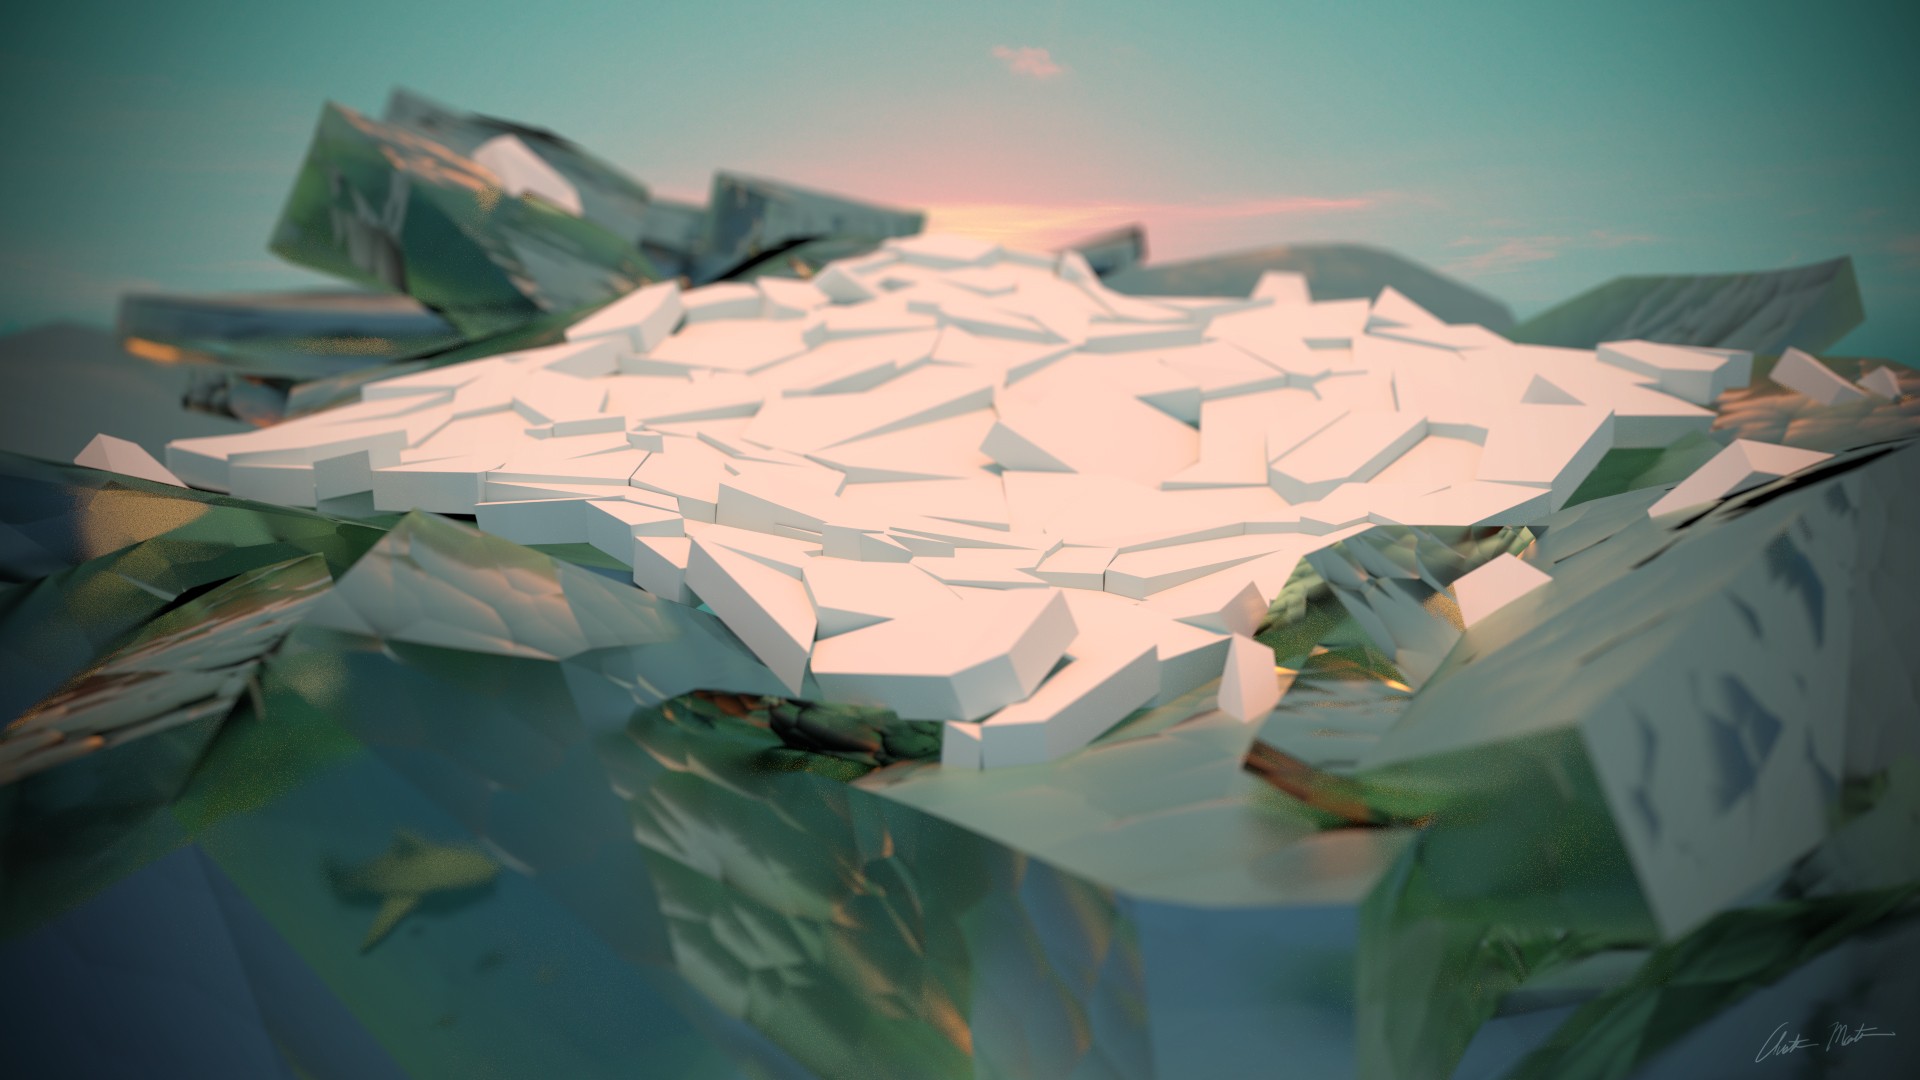 General 1920x1080 ice sea sunset minimalism Voronoi diagram abstract fantasy art imagination digital art render CGI